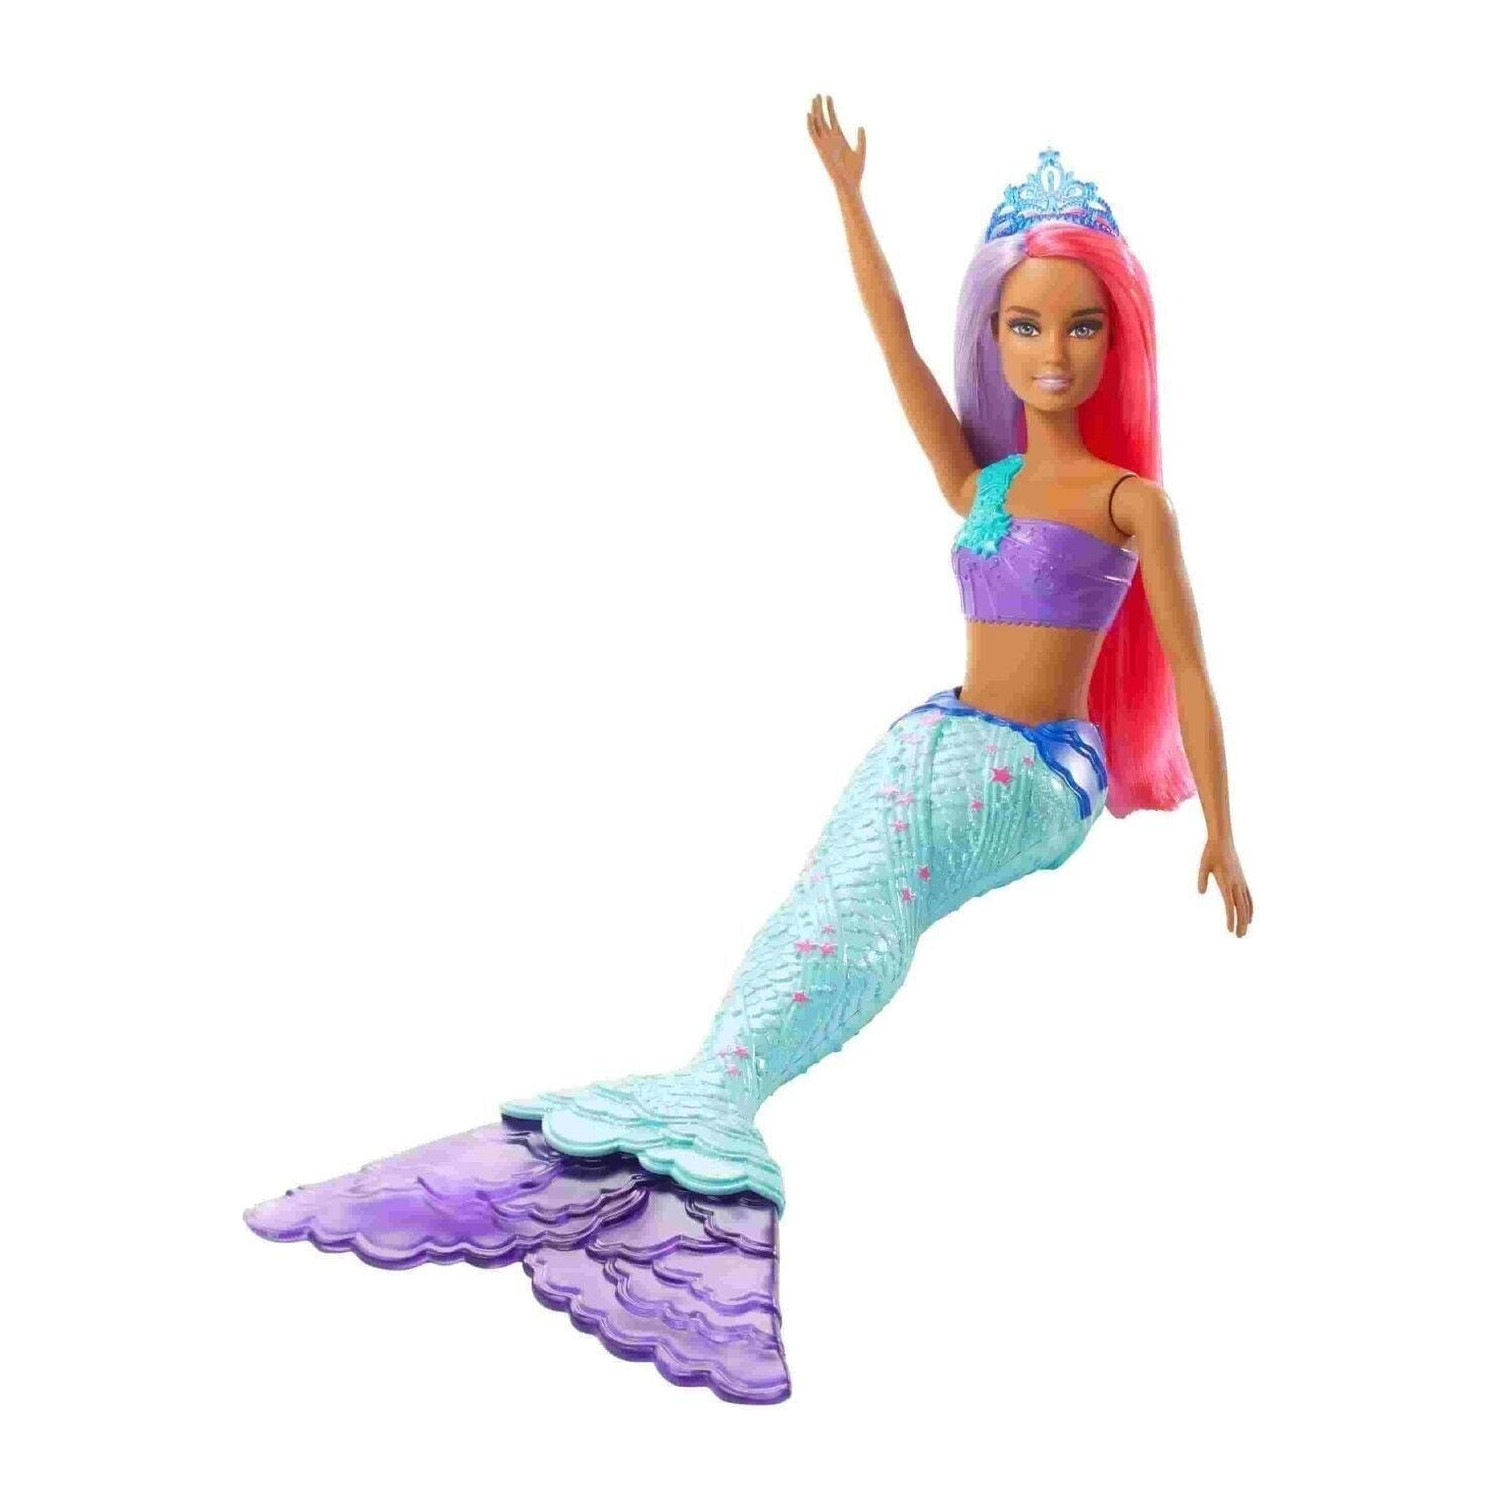 Куклы Barbie Dreamtopia Mermaid GJK07 куклы barbie русалки dreamtopia hgr09